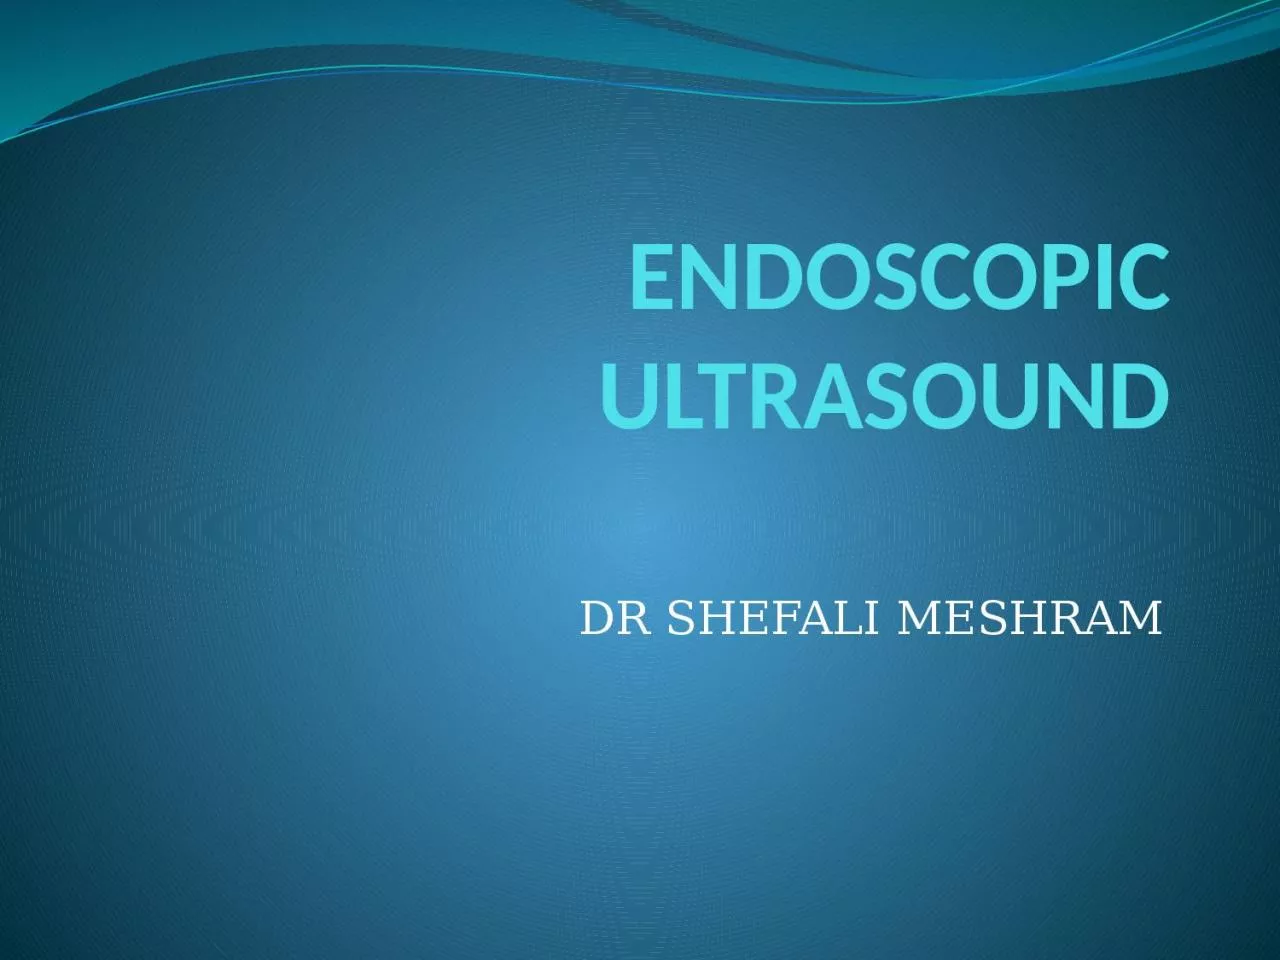 ENDOSCOPIC ULTRASOUND DR SHEFALI MESHRAM